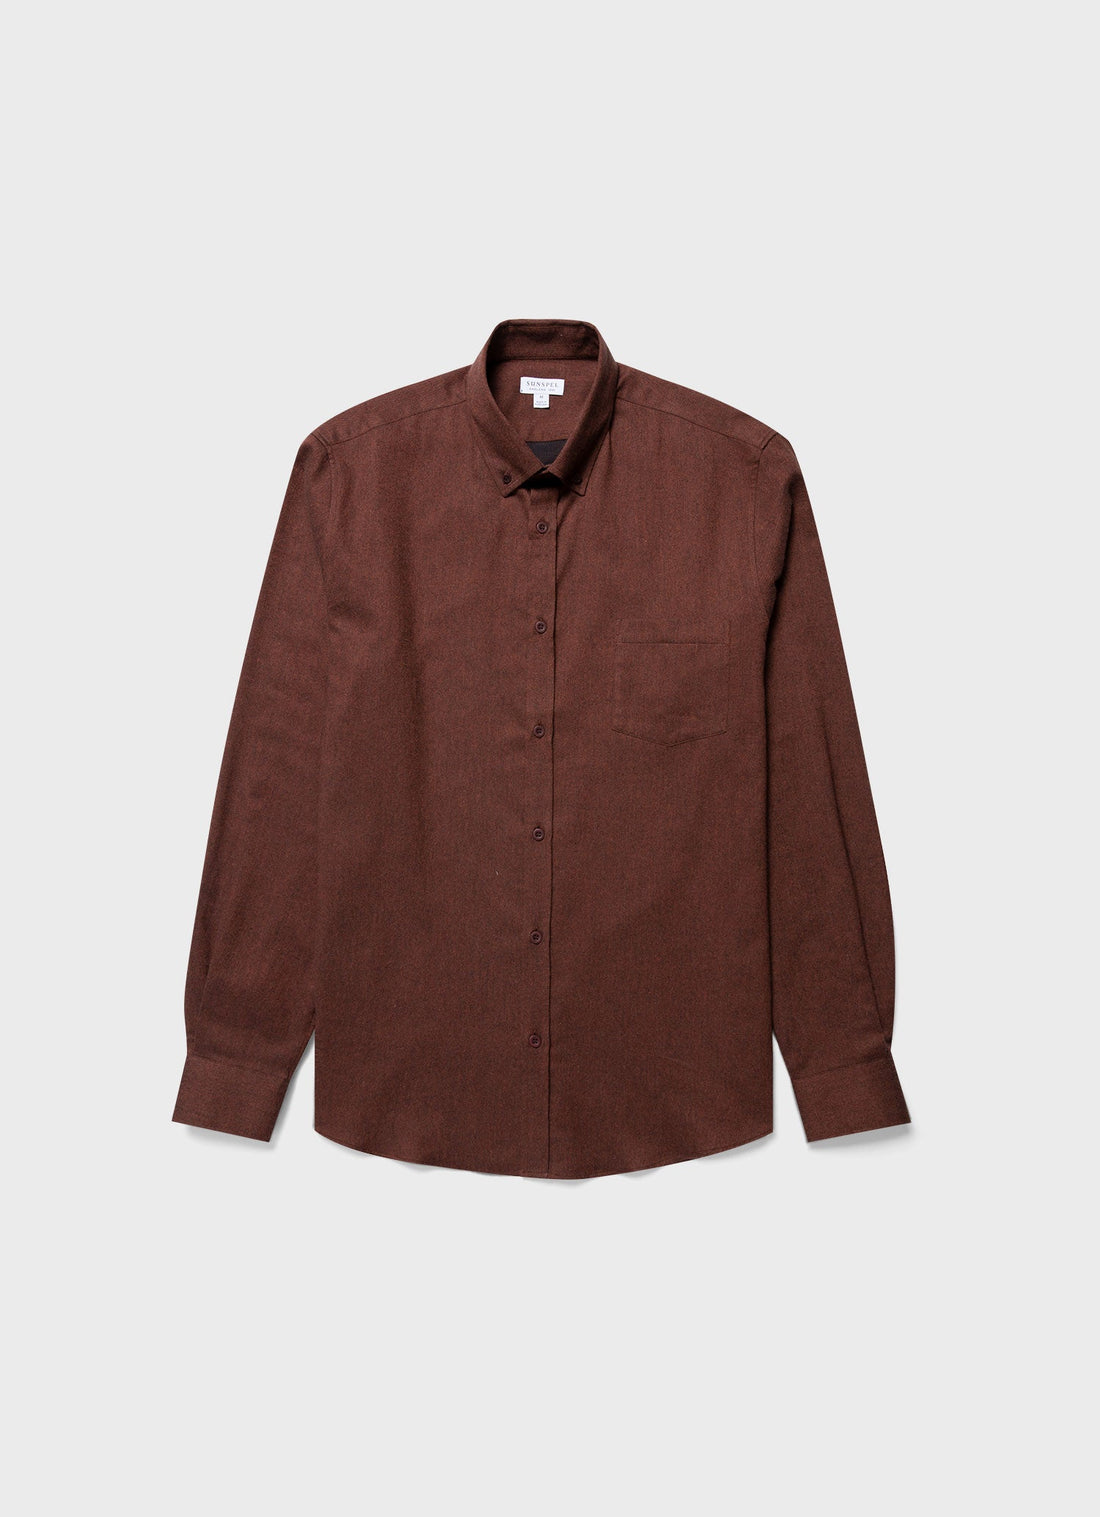 Men's Button Down Flannel Shirt in Pecan Melange